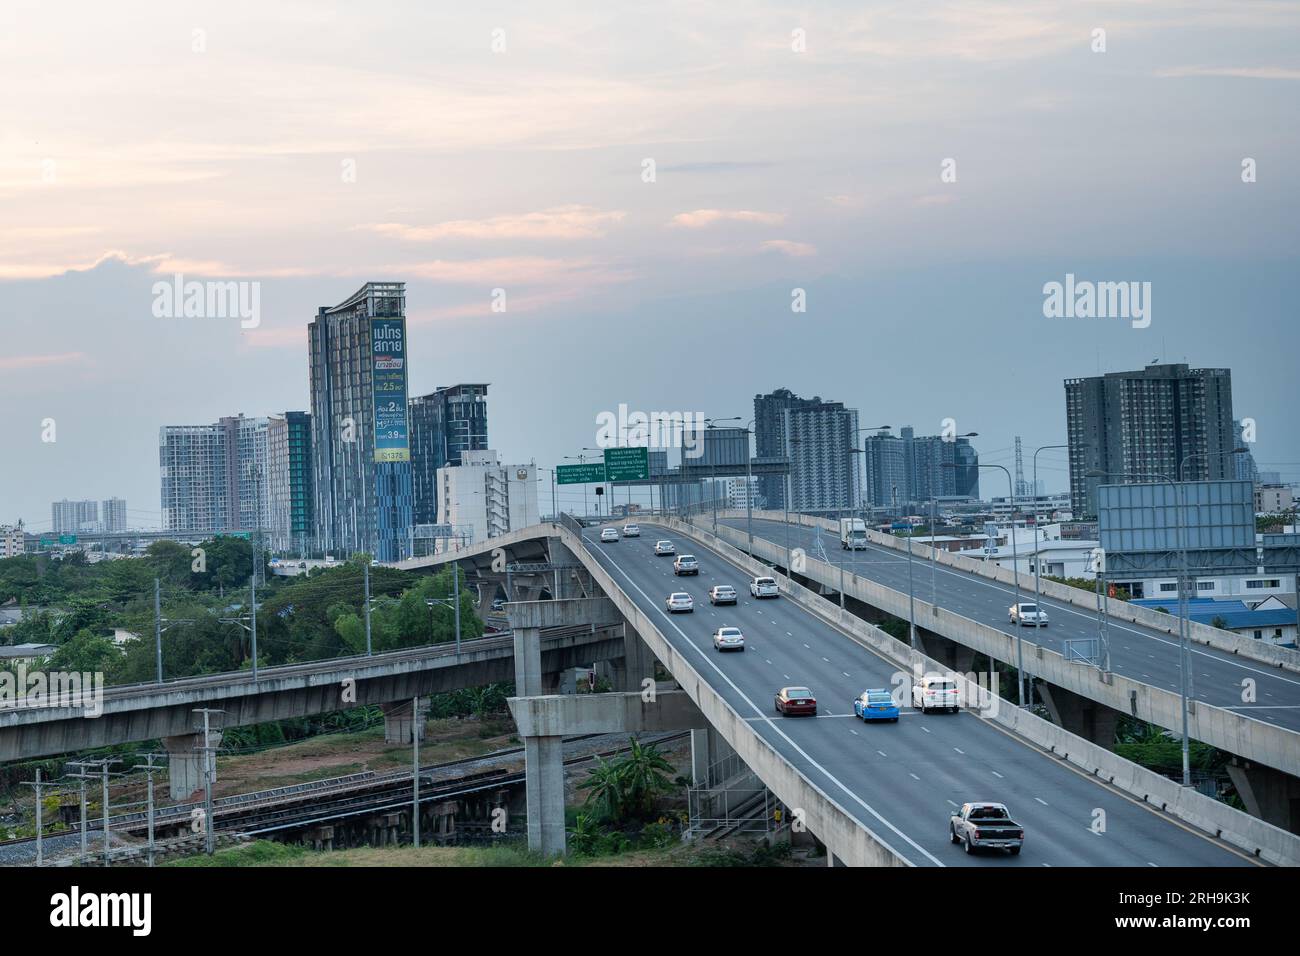 Vista de Kuala Lumpur desde el sistema de transporte Mass Rapid Transit (MRT) Foto de stock